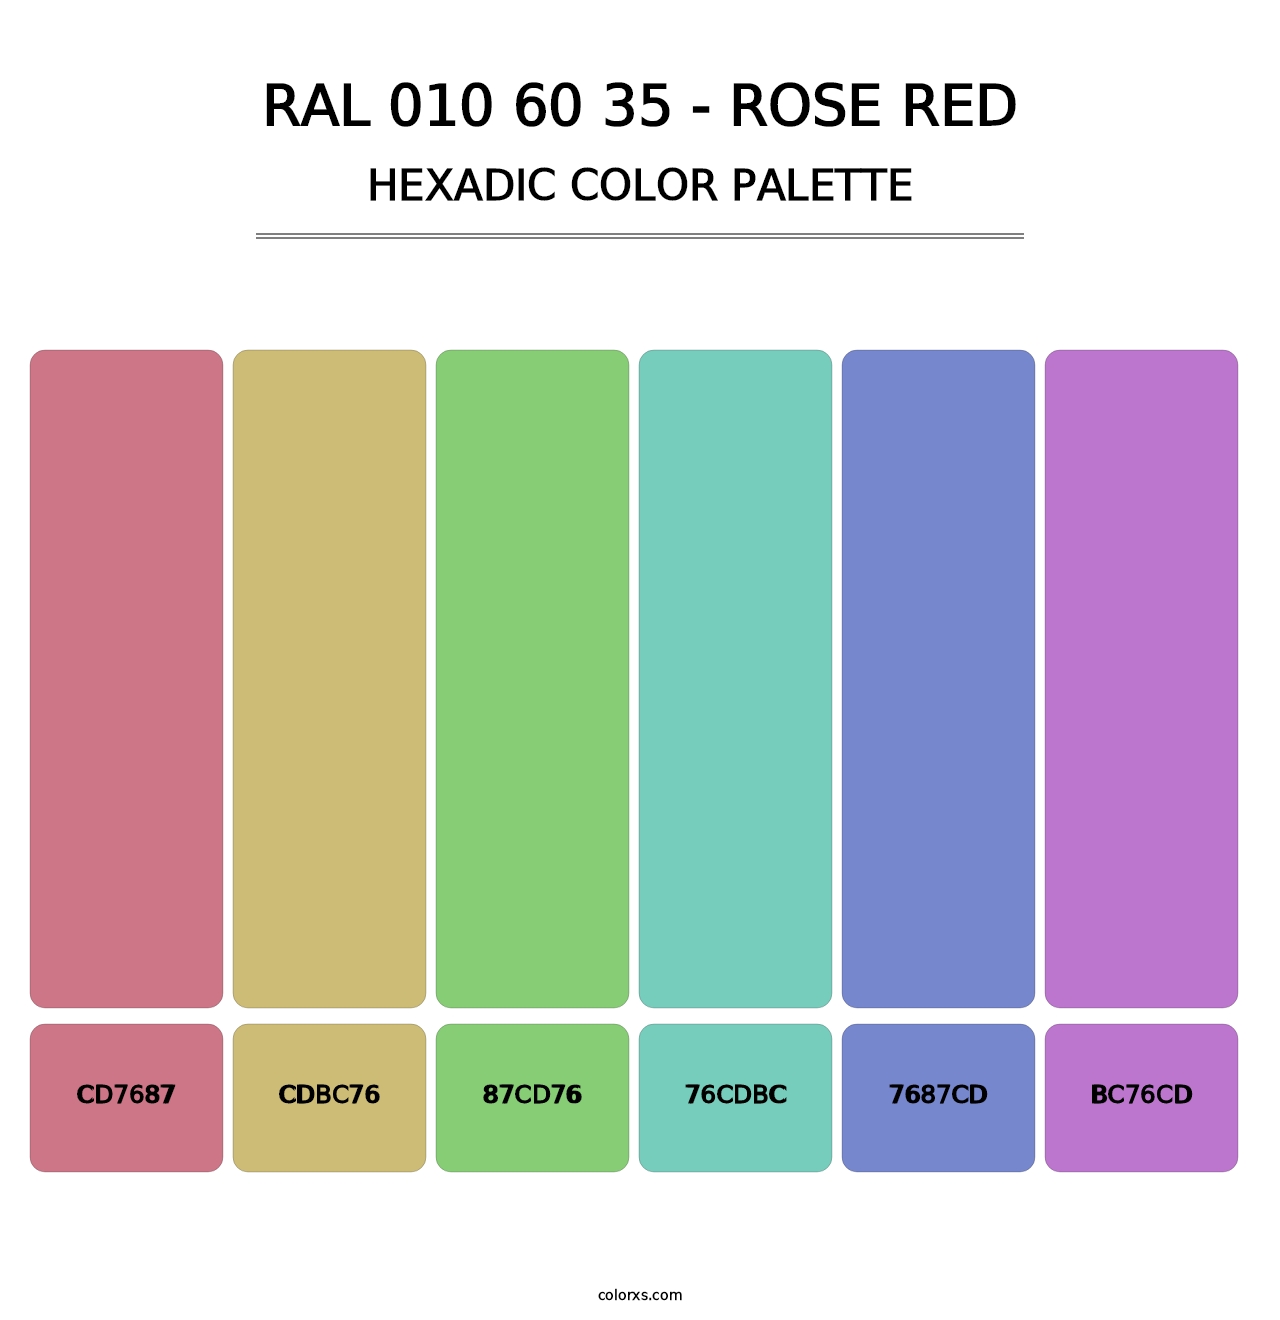 RAL 010 60 35 - Rose Red - Hexadic Color Palette